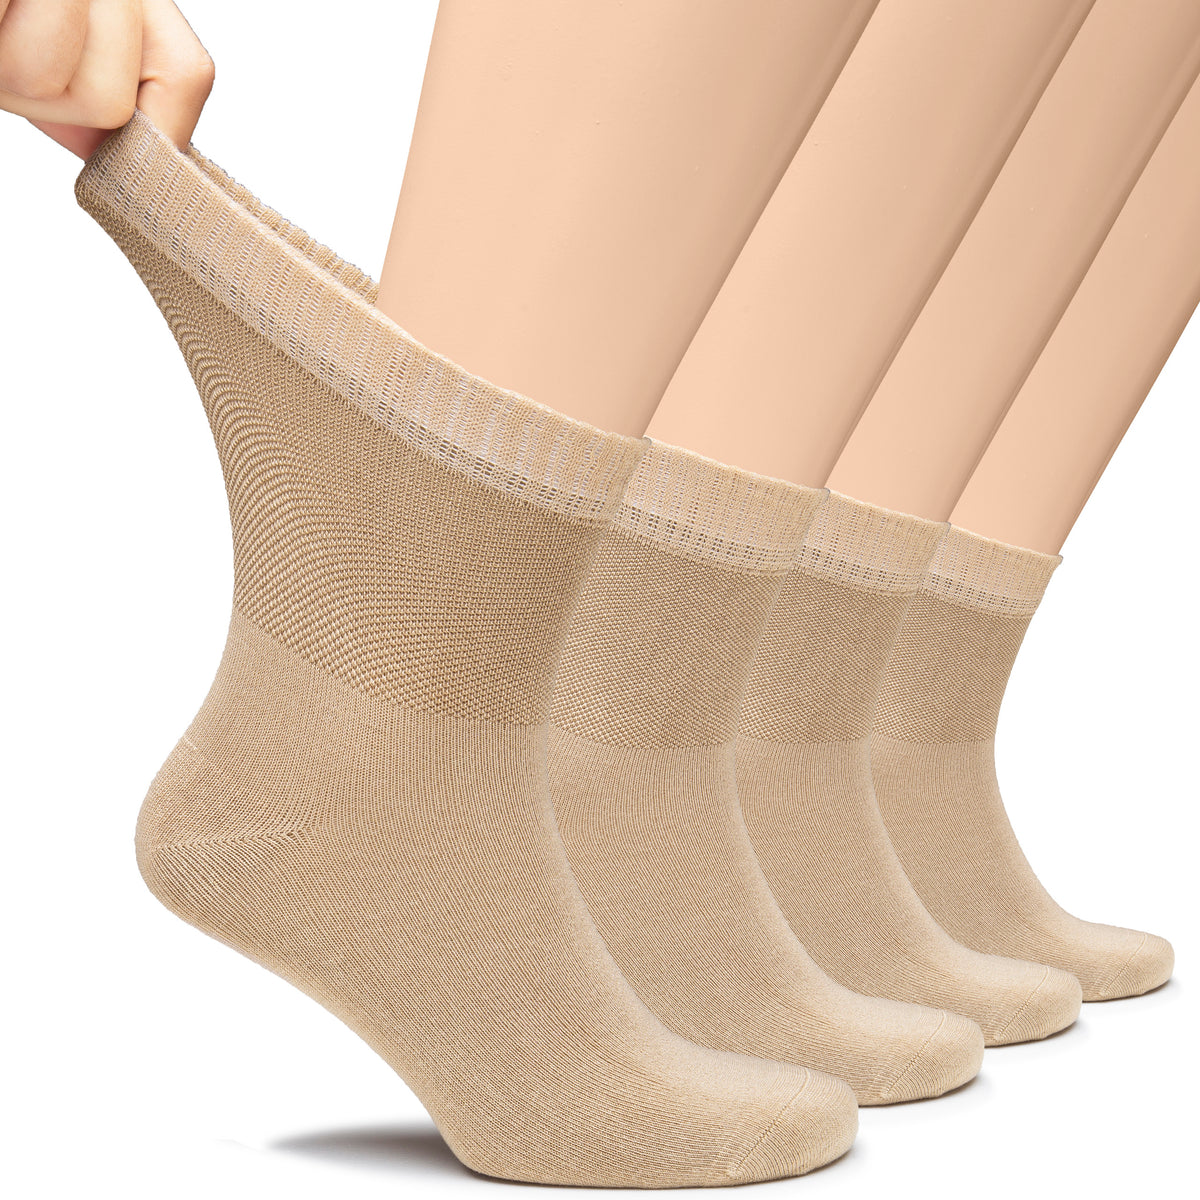 Hugh Ugoli Lightweight Men's Diabetic Ankle Socks Bamboo Thin Socks Seamless Toe and Non-Binding Top, 4 Pairs, Shoe Size 8-11/11-13 |  | 